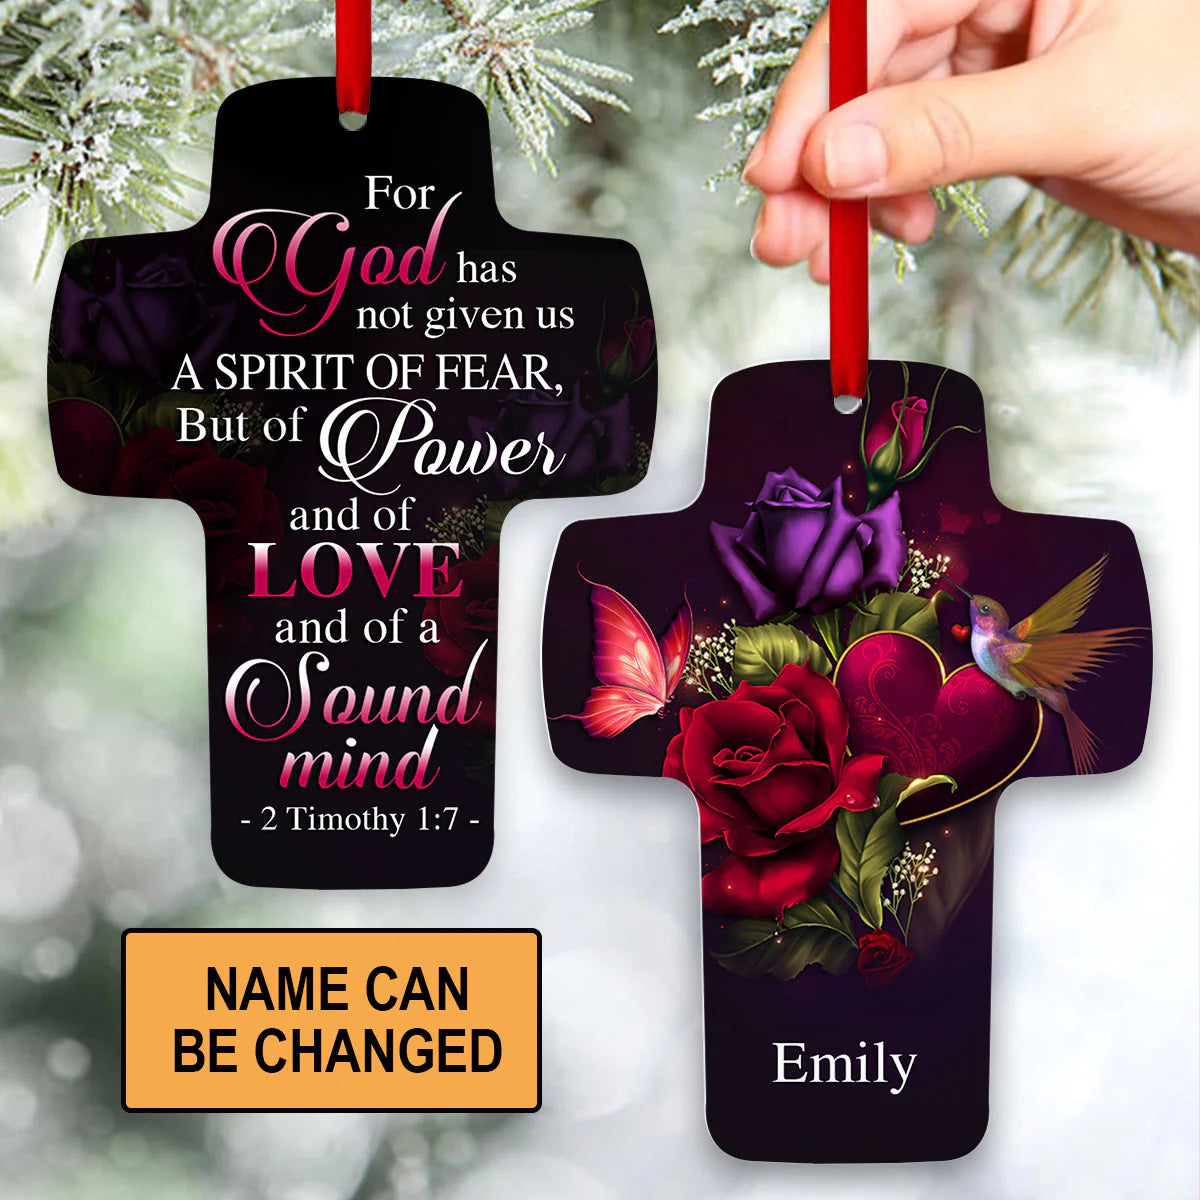 Christianartbag Ornament, God Has Given Us Power And Sound Mind 2 Timothy 1:7, Christmas Ornament, Christmas Gift, Personalized Ornament. - Christian Art Bag